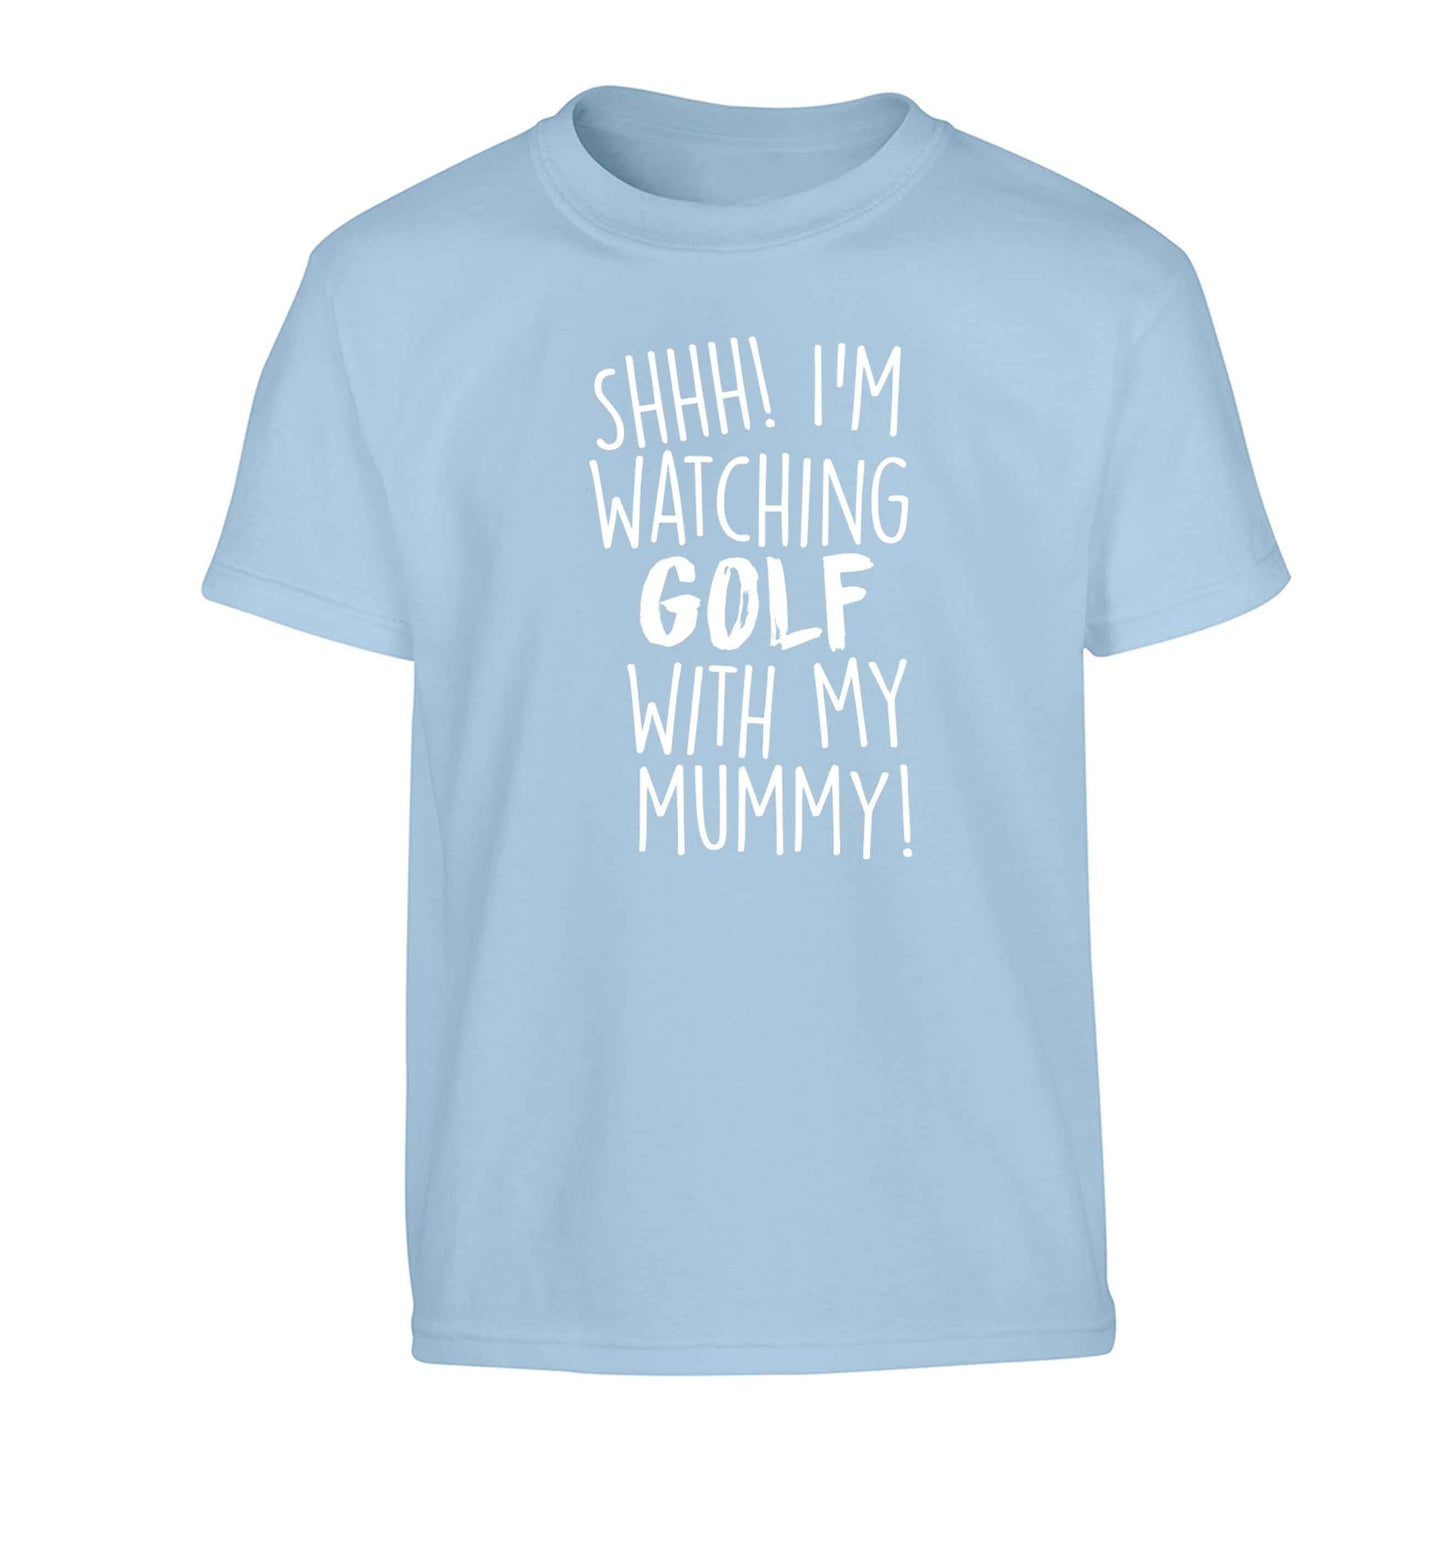 Shh I'm watching golf with my mummy Children's light blue Tshirt 12-13 Years